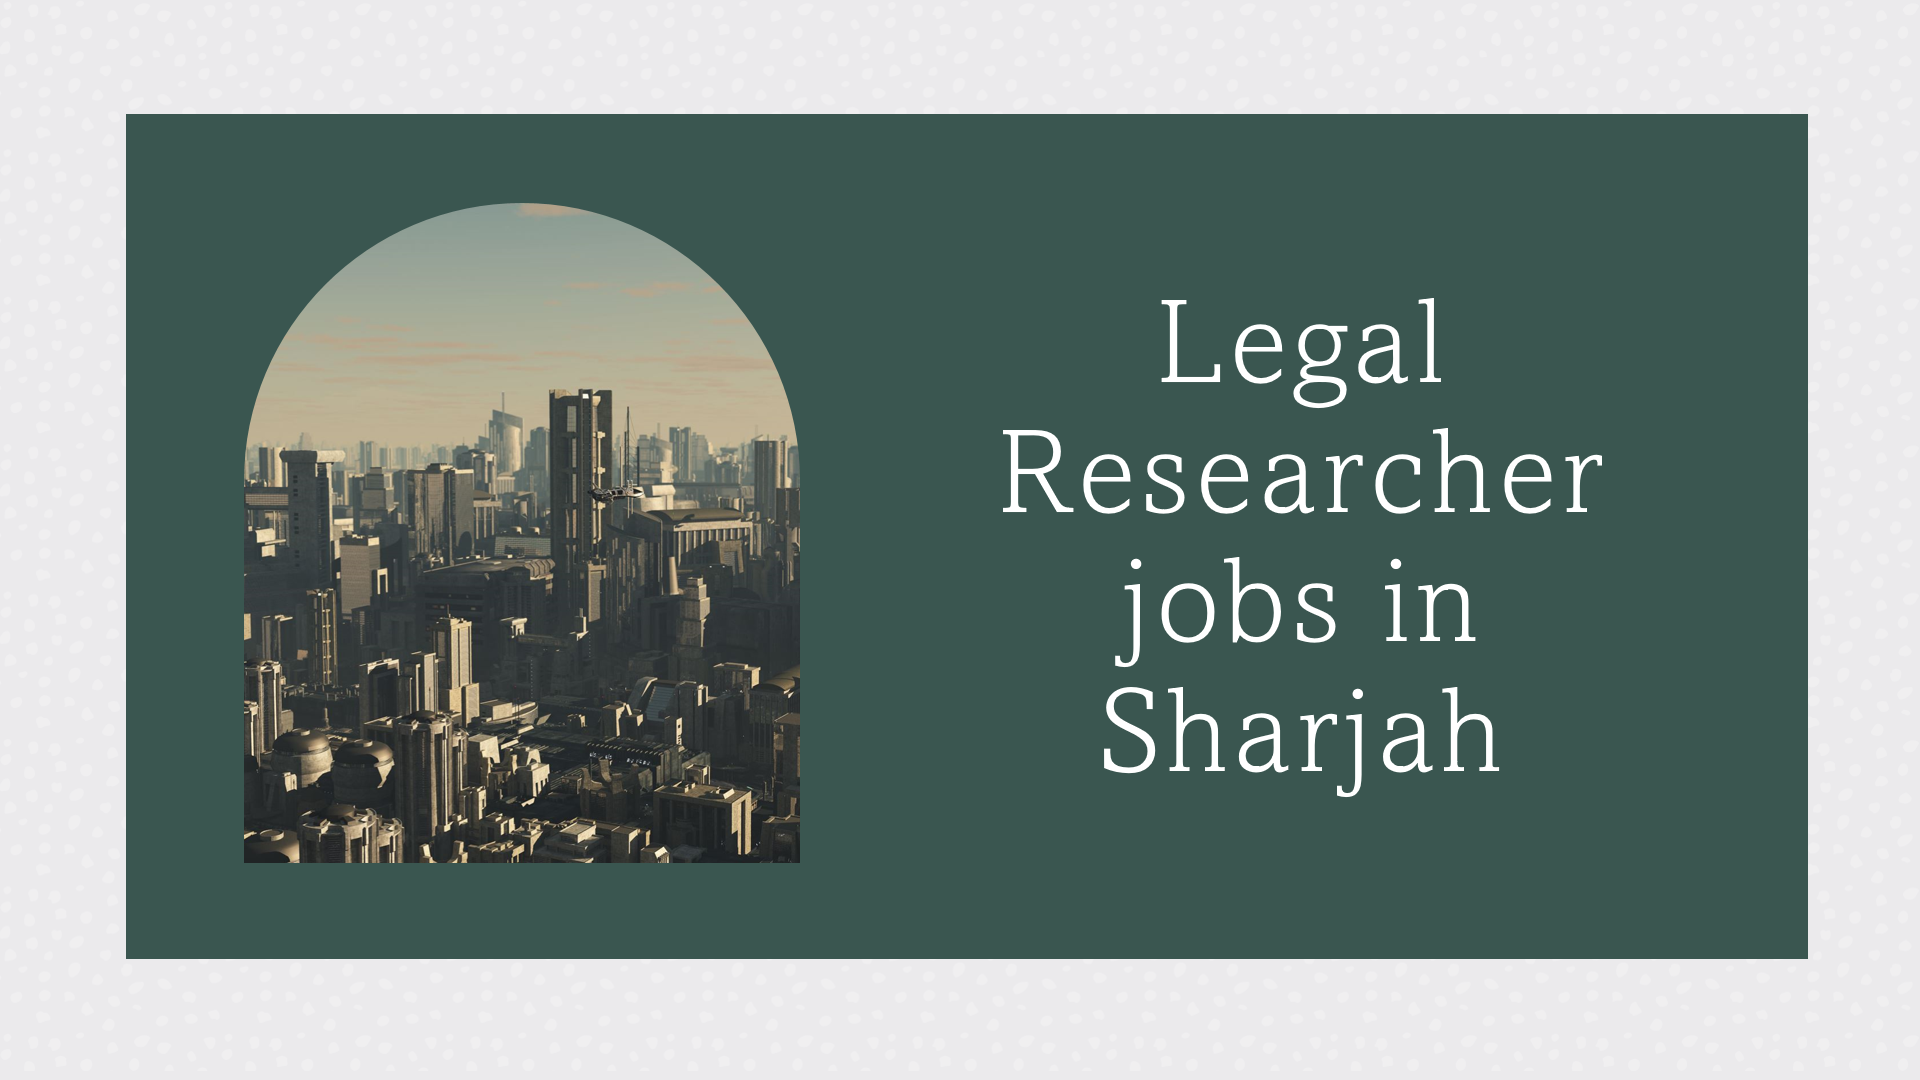 Legal Researcher jobs in Sharjah